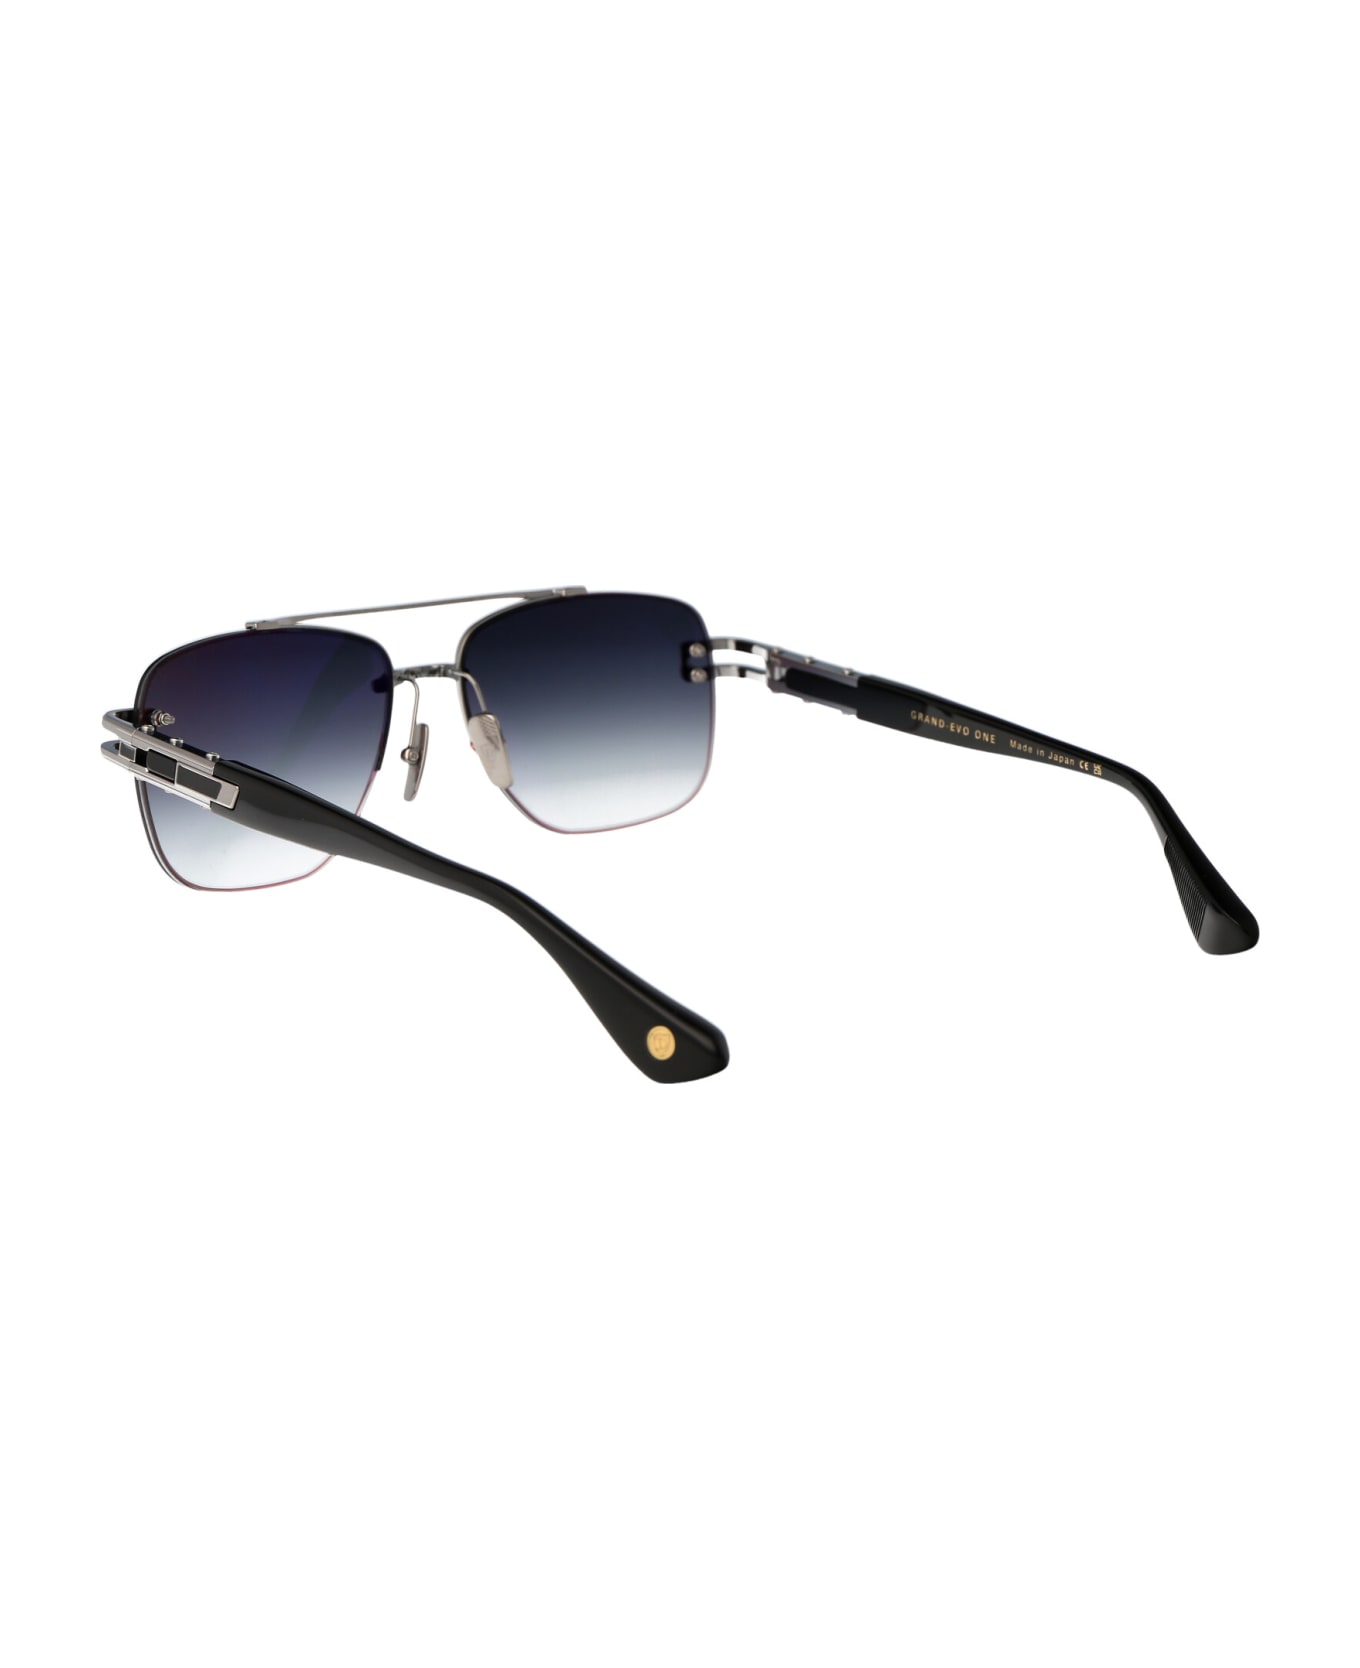 Dita Grand-evo One Sunglasses - Black Palladium w/ Grey to Clear Gradient